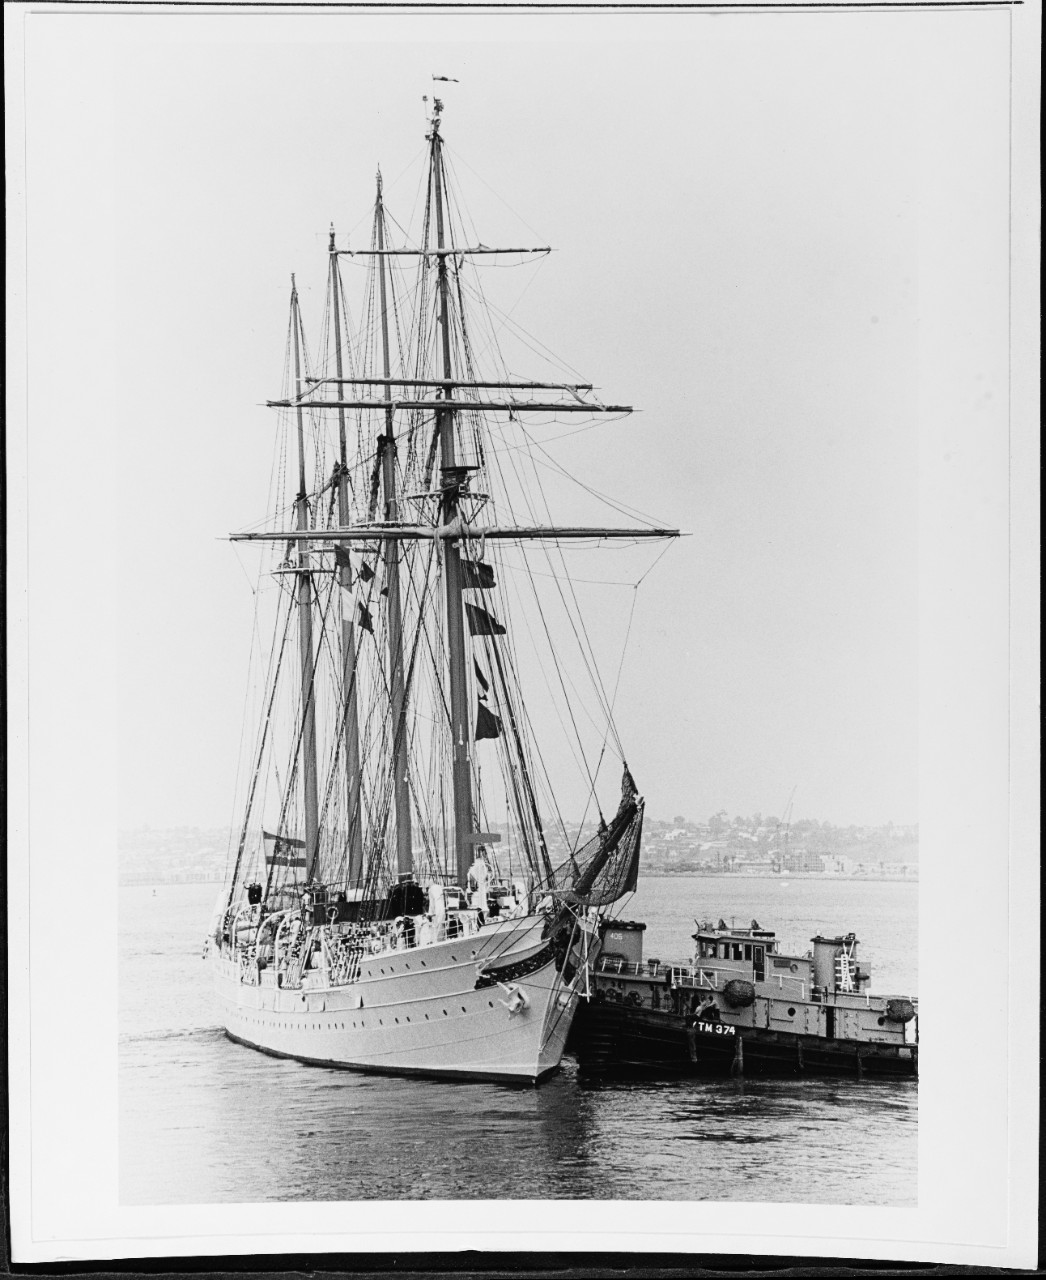 JUAN SEBASTIAN DE ELCANO (Spanish Training Ship)